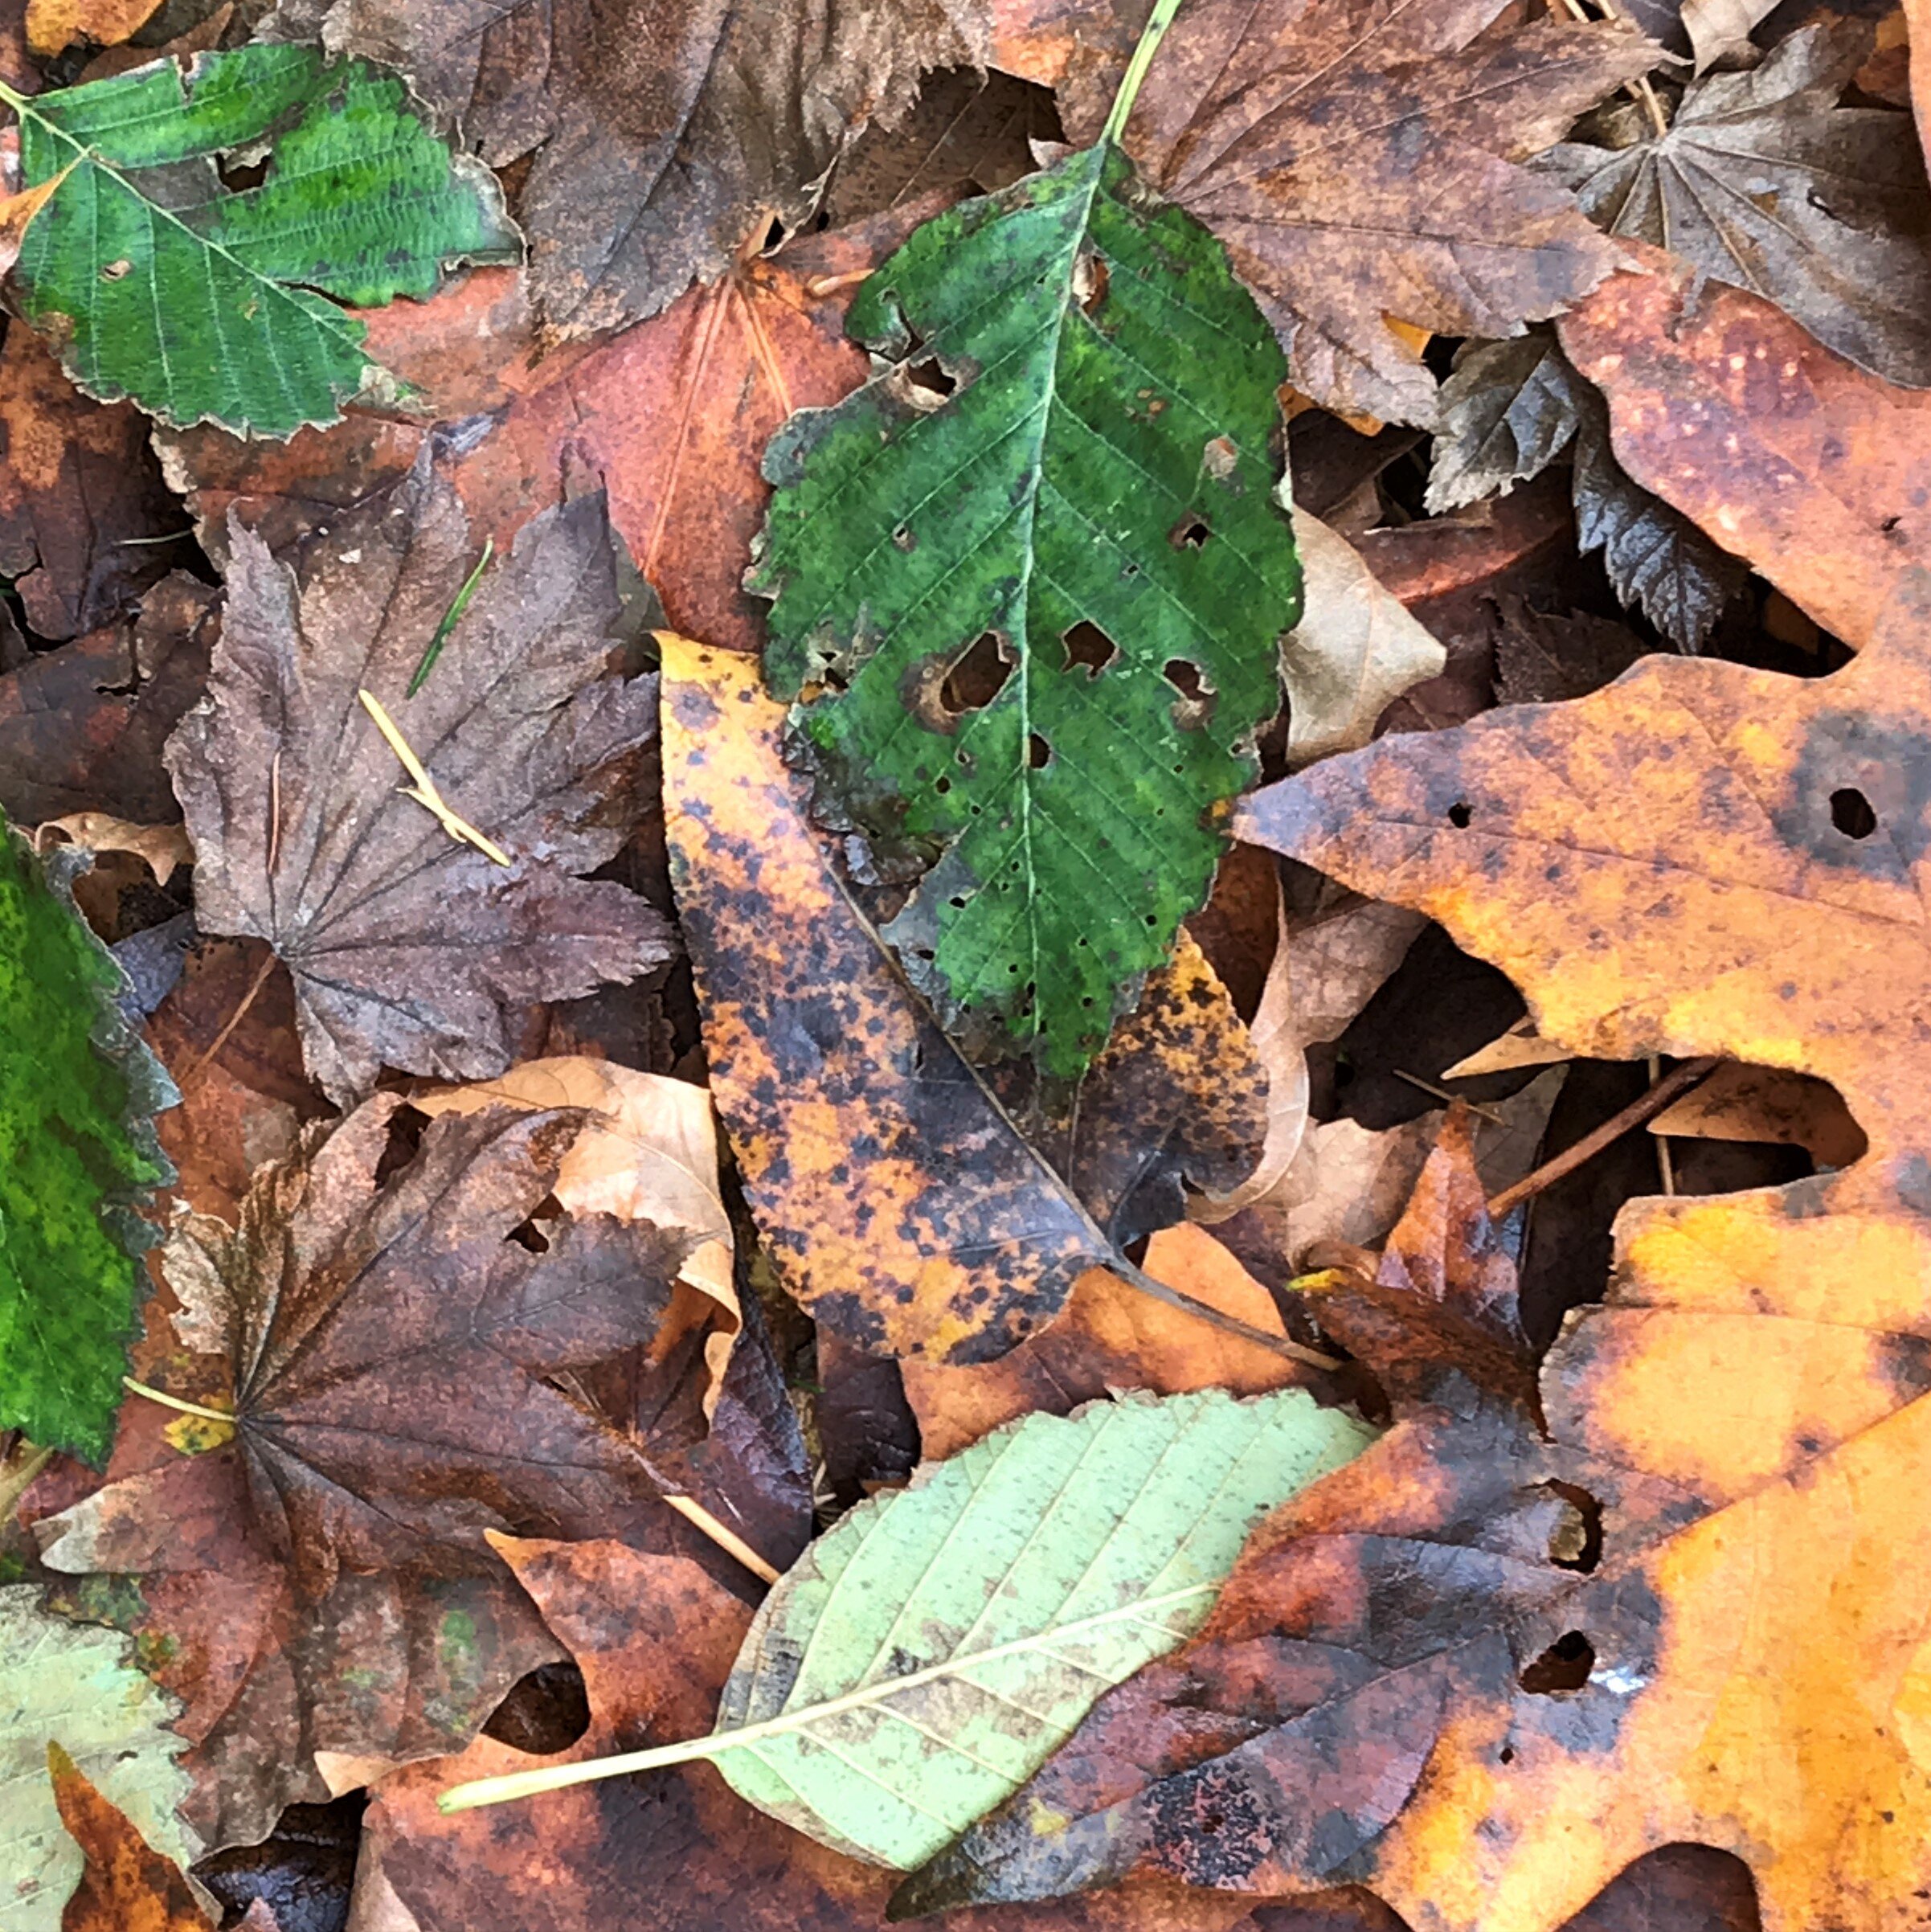 alder leaves that are still green